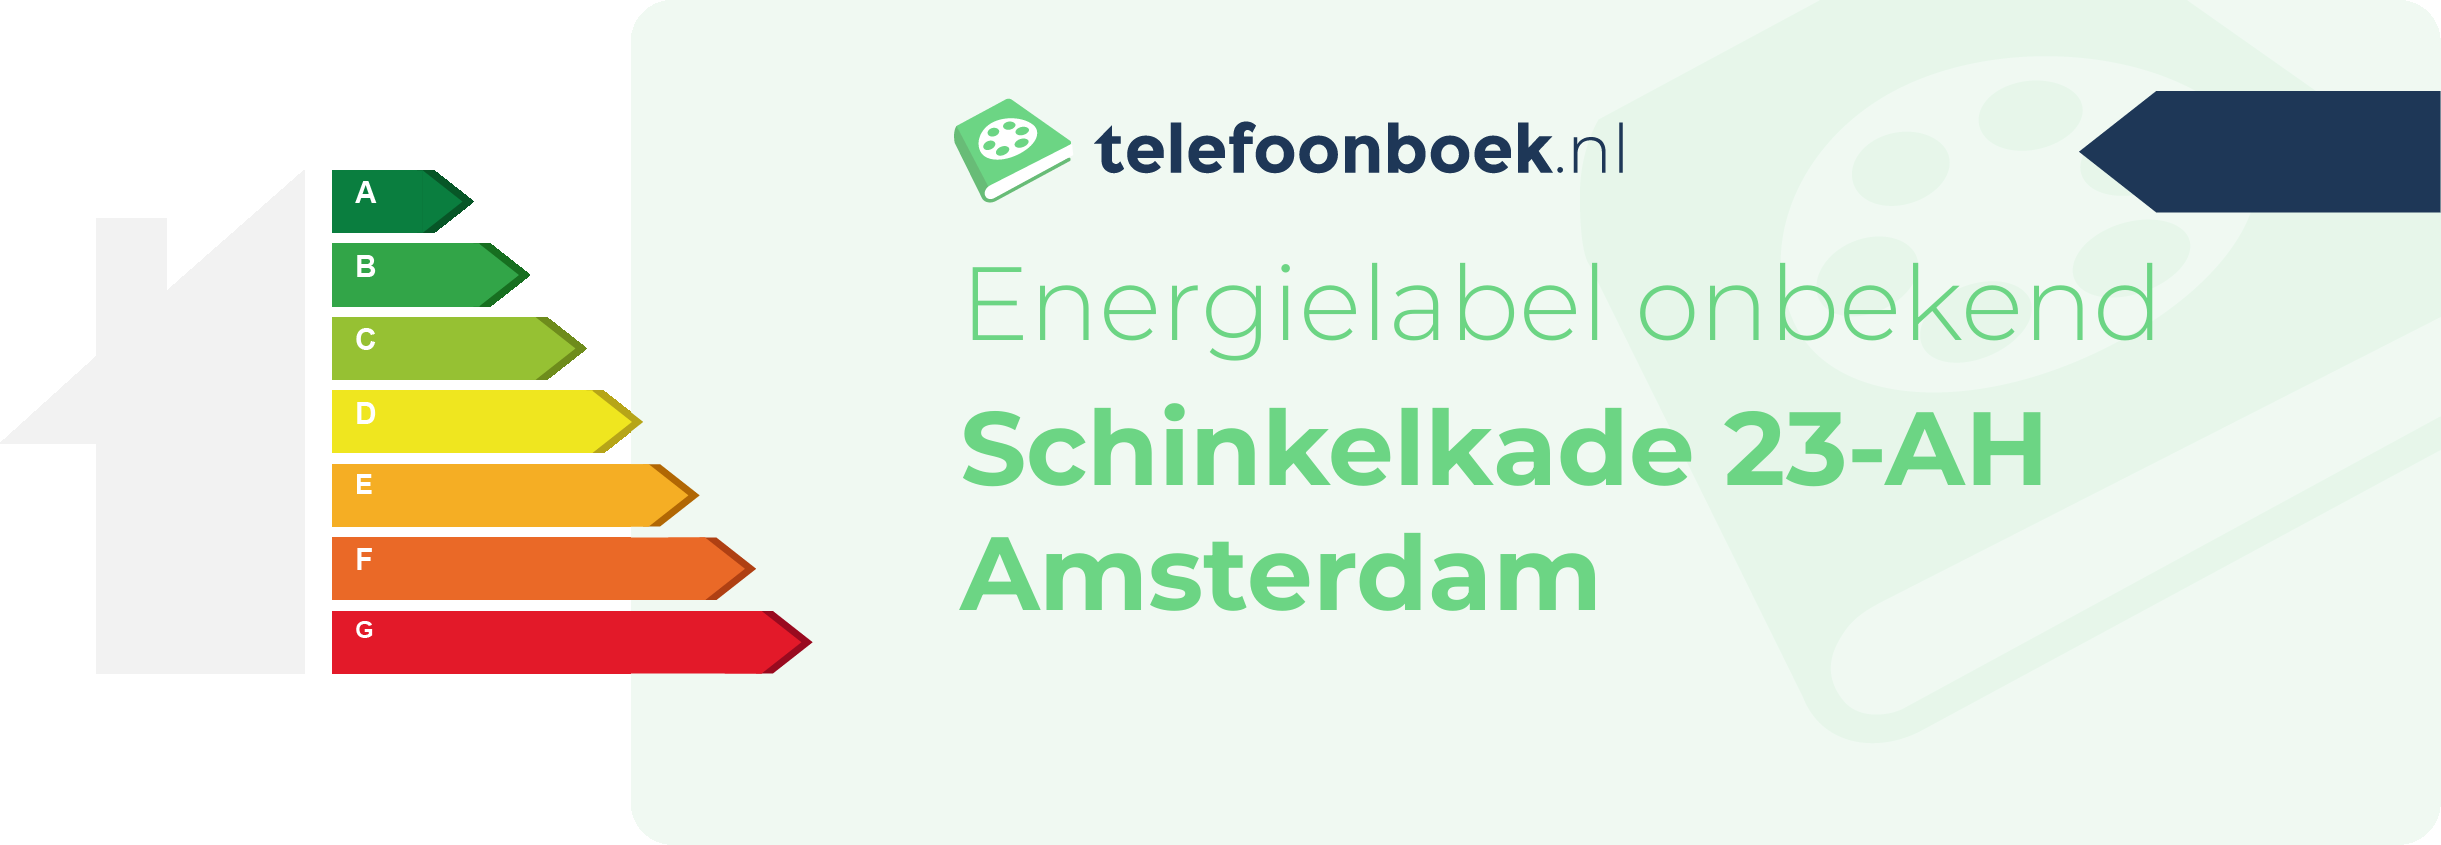 Energielabel Schinkelkade 23-AH Amsterdam